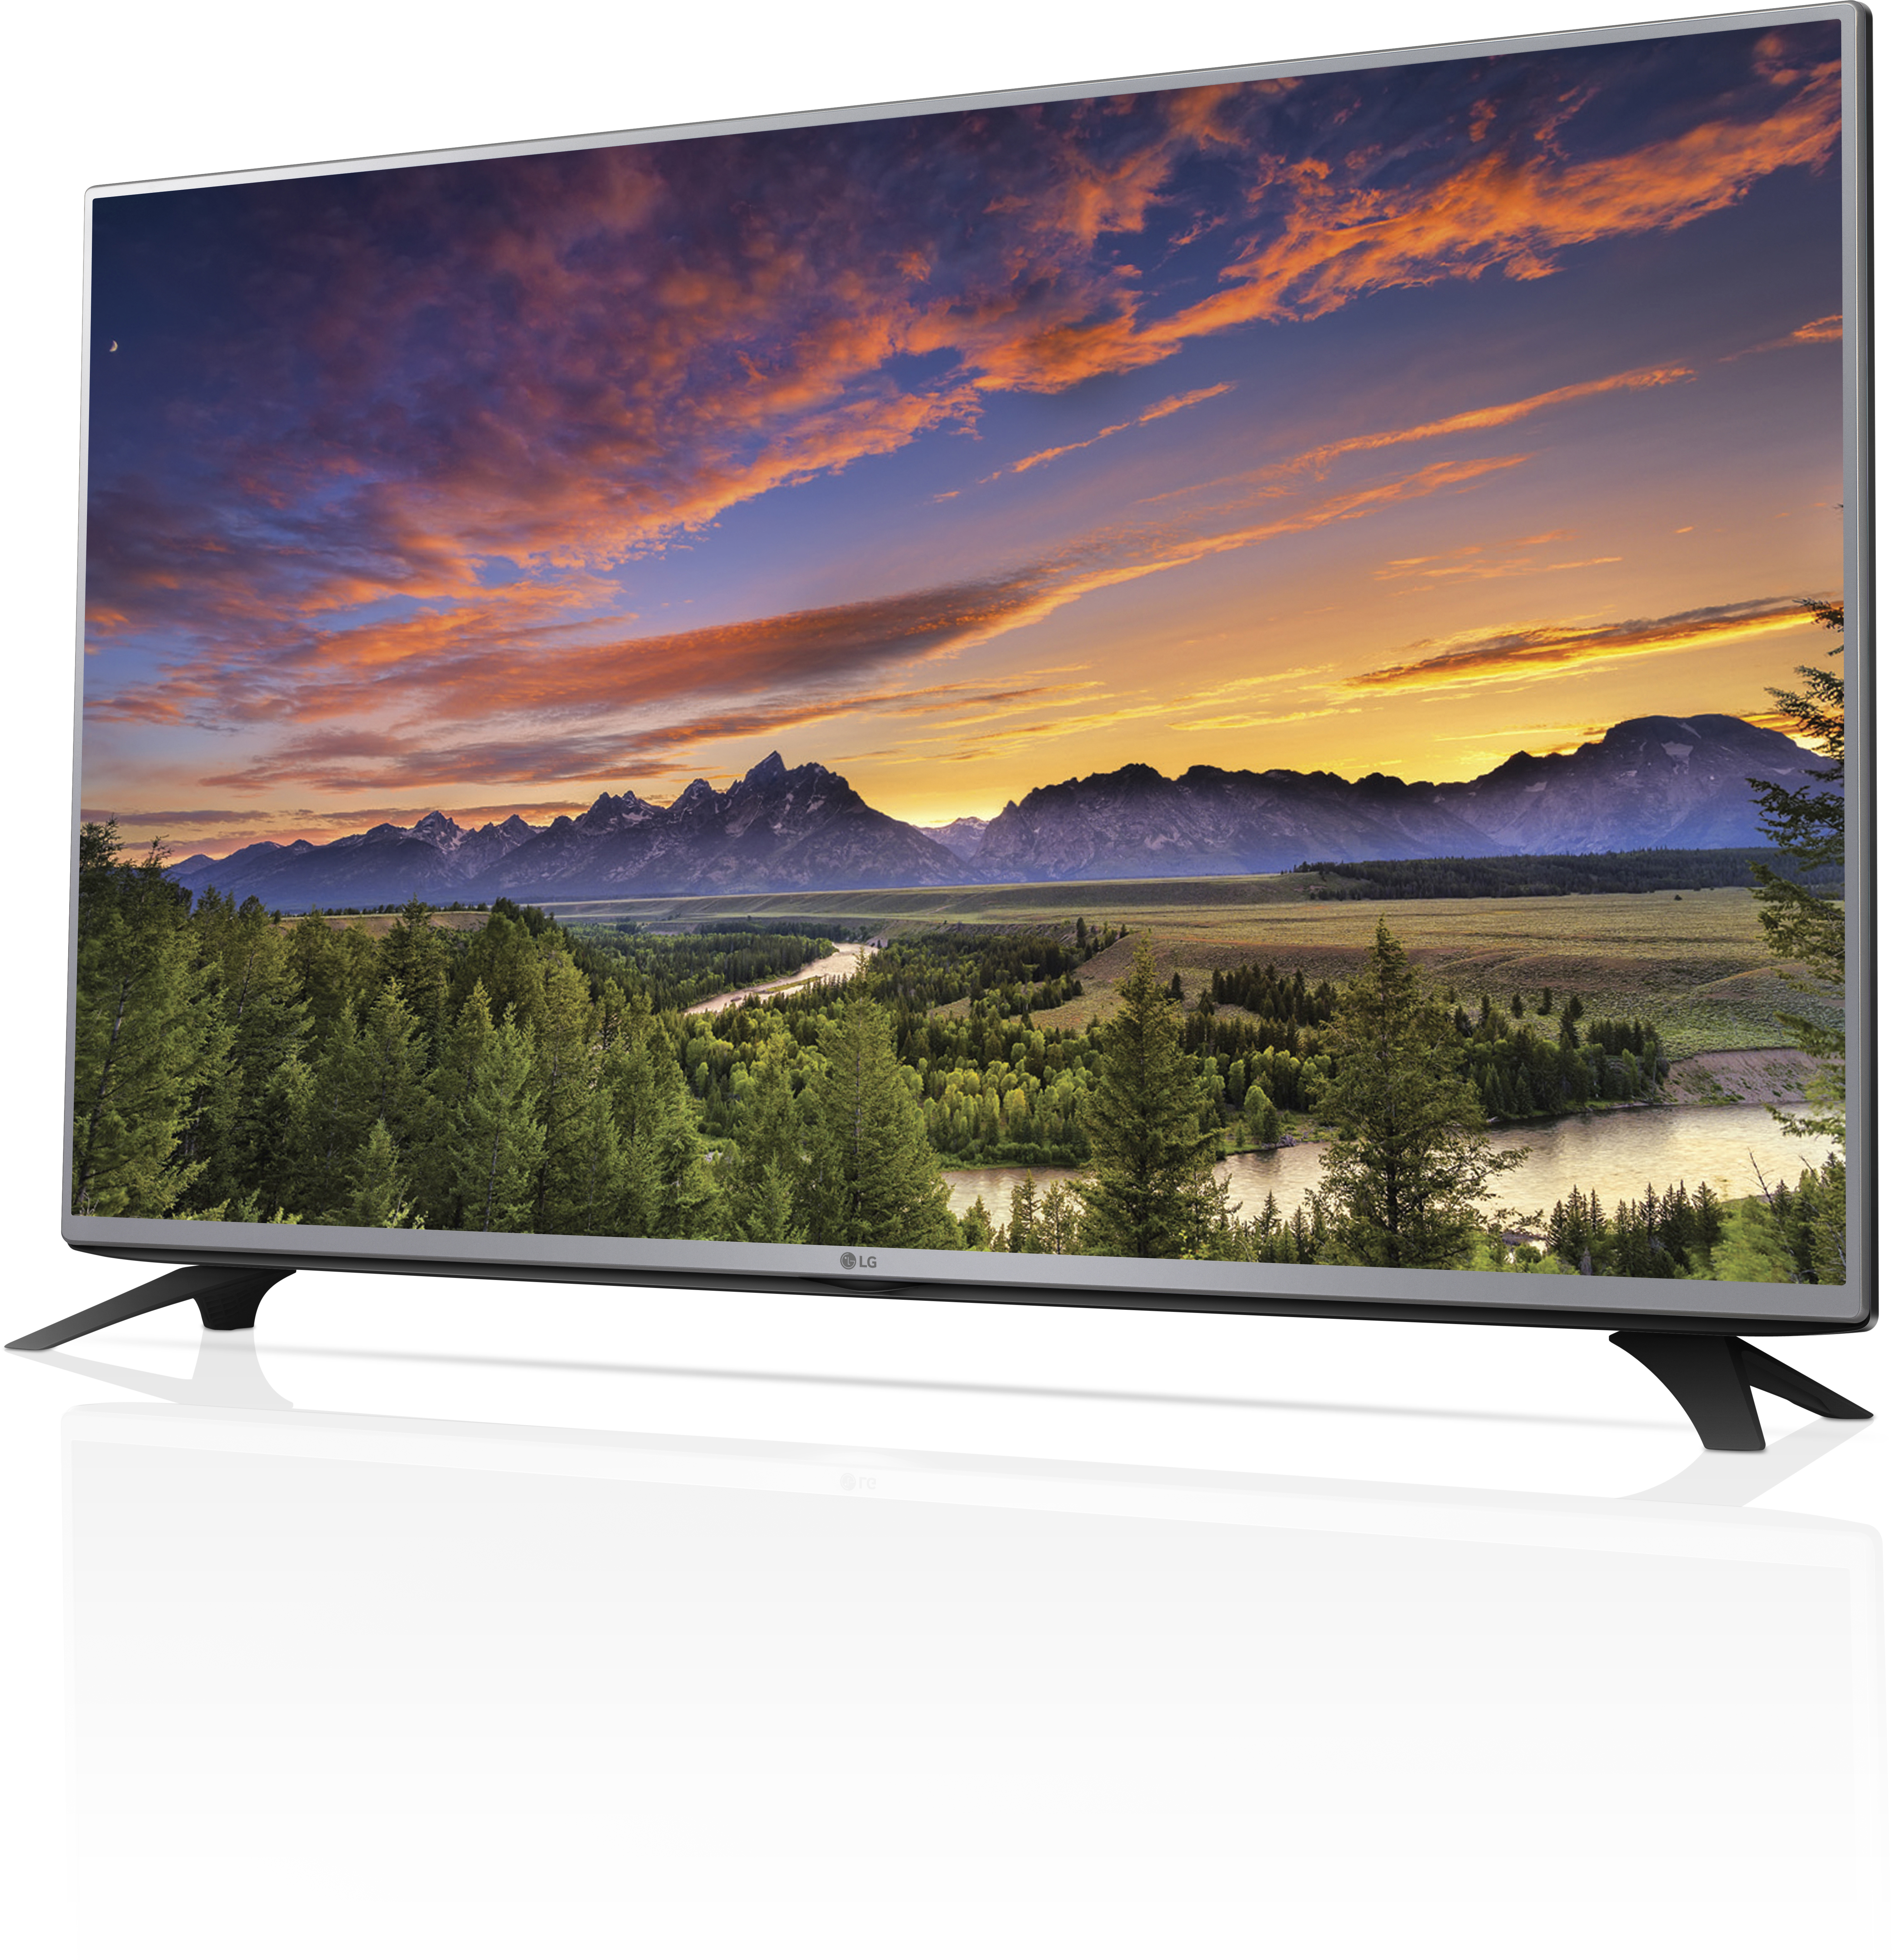 Купить телевизор в магазине самсунг. LG 32lf551c. LG 32lf562u. LG 32lf510u. LG 32lf560u.